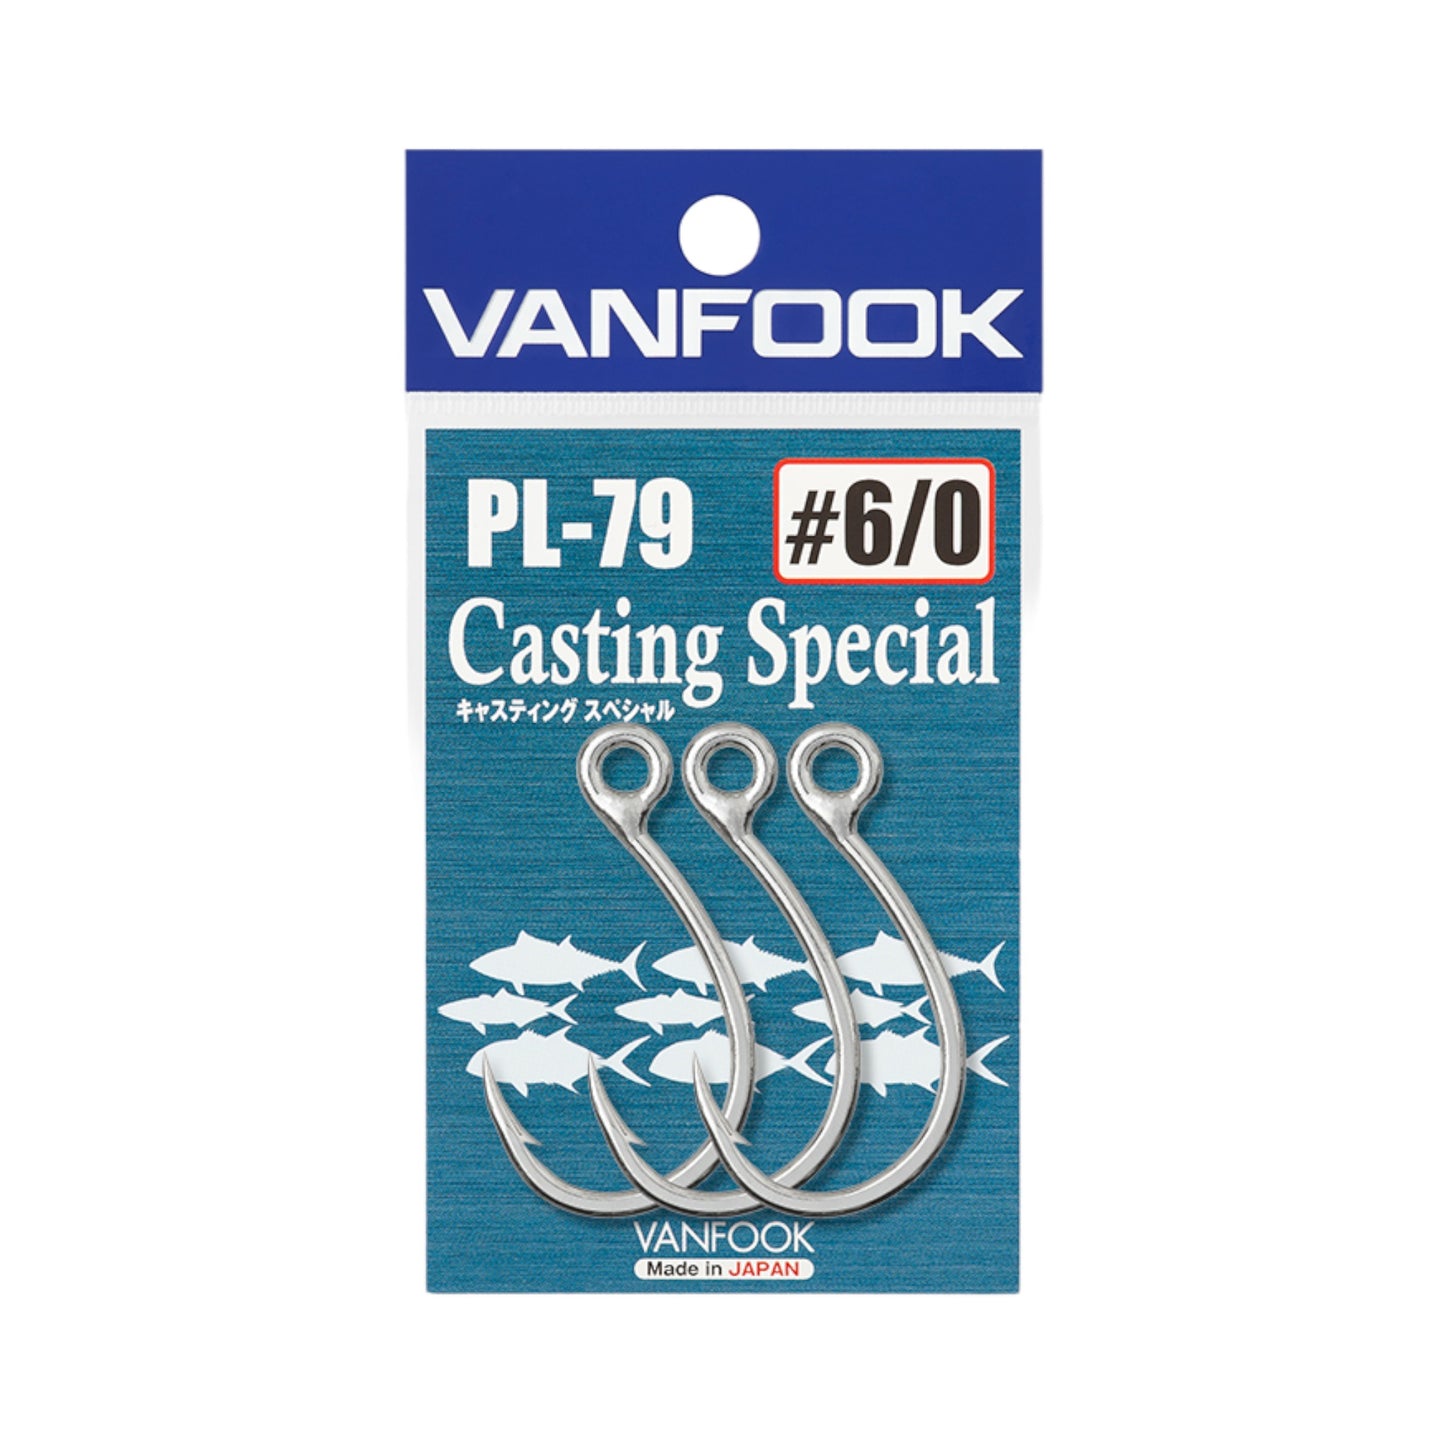 Vanfook Casting Special PL-79